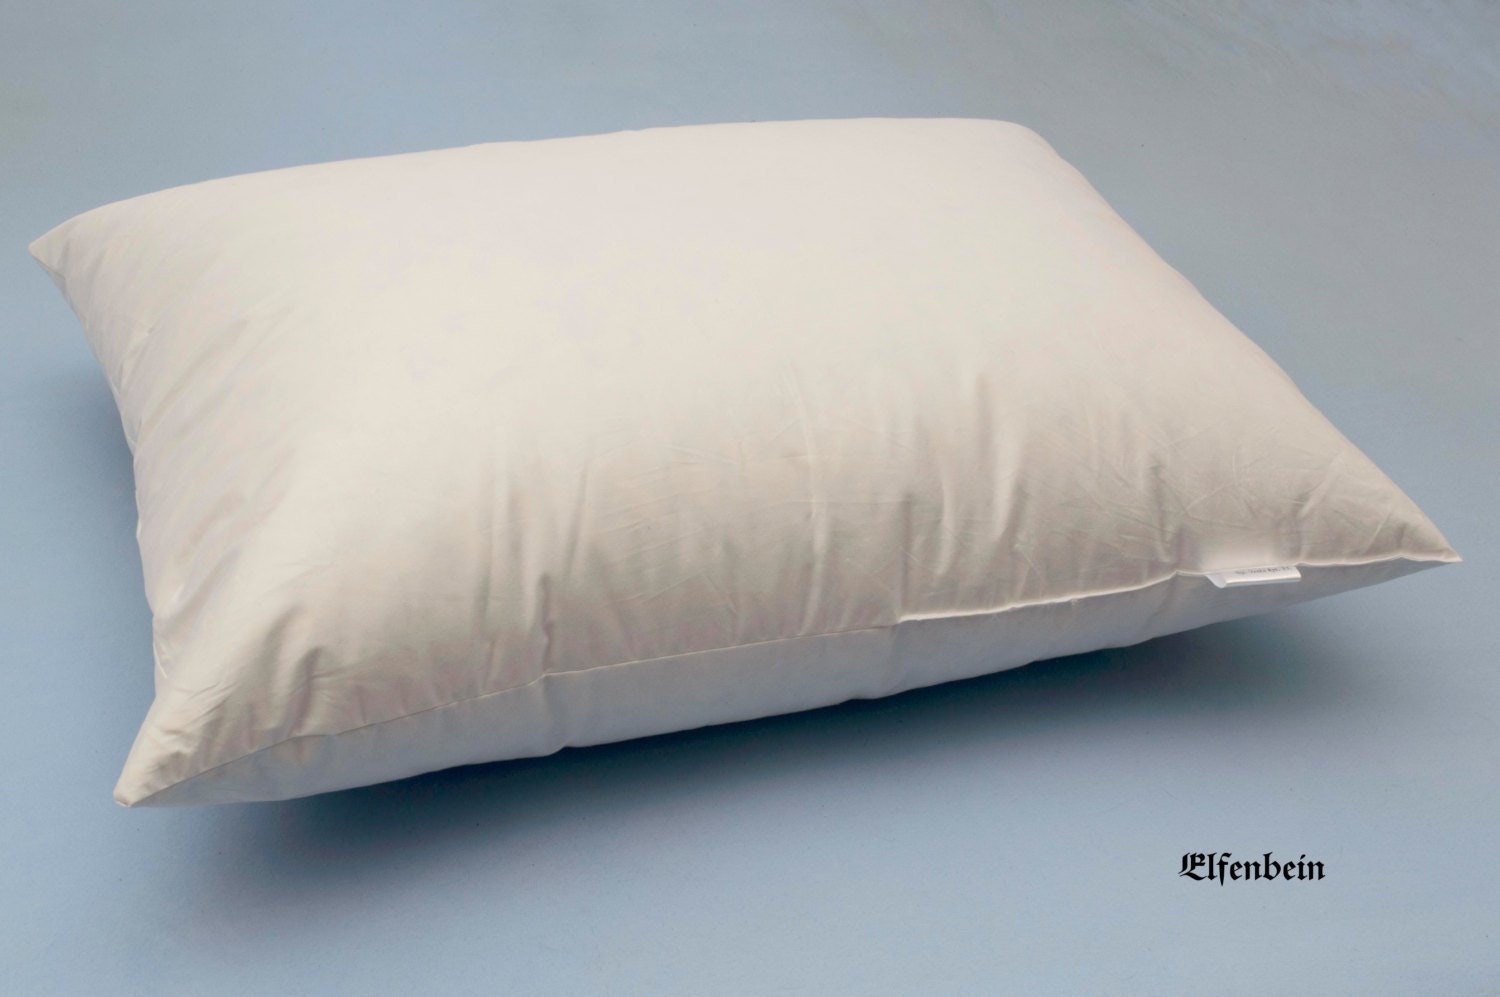 Pillowflex Synthetic Down Pillow Insert for Sham AKA Faux/Alternative (36cm by 50cm )